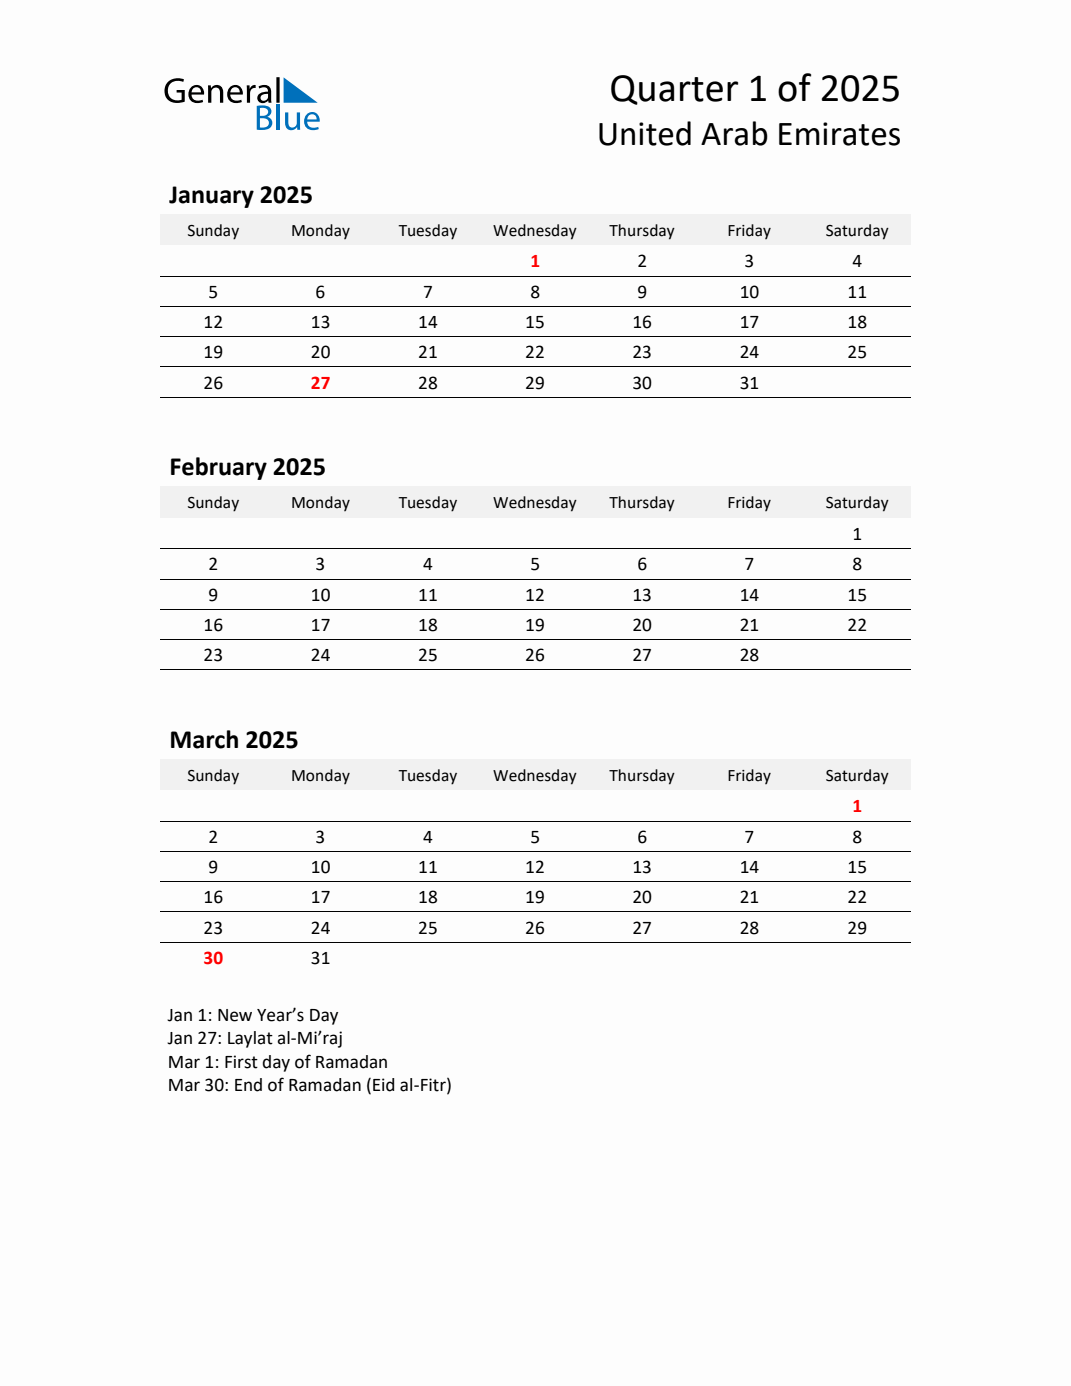 Q1 2025 Quarterly Calendar with United Arab Emirates Holidays